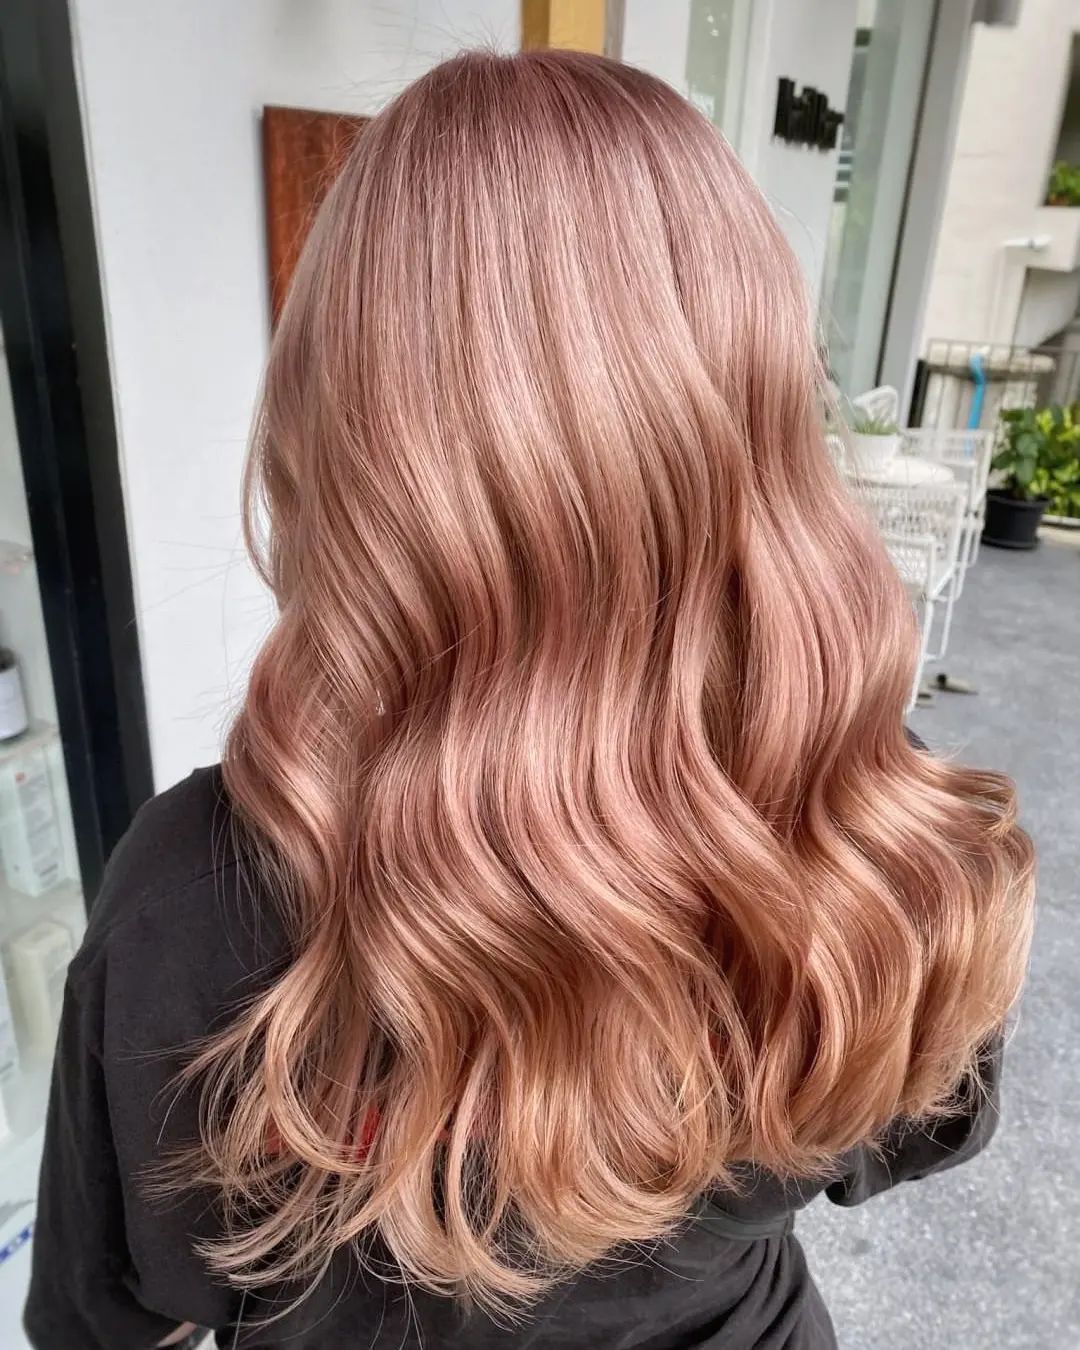 wanita dengan rambut panjang bergelombang warna pastel rose gold